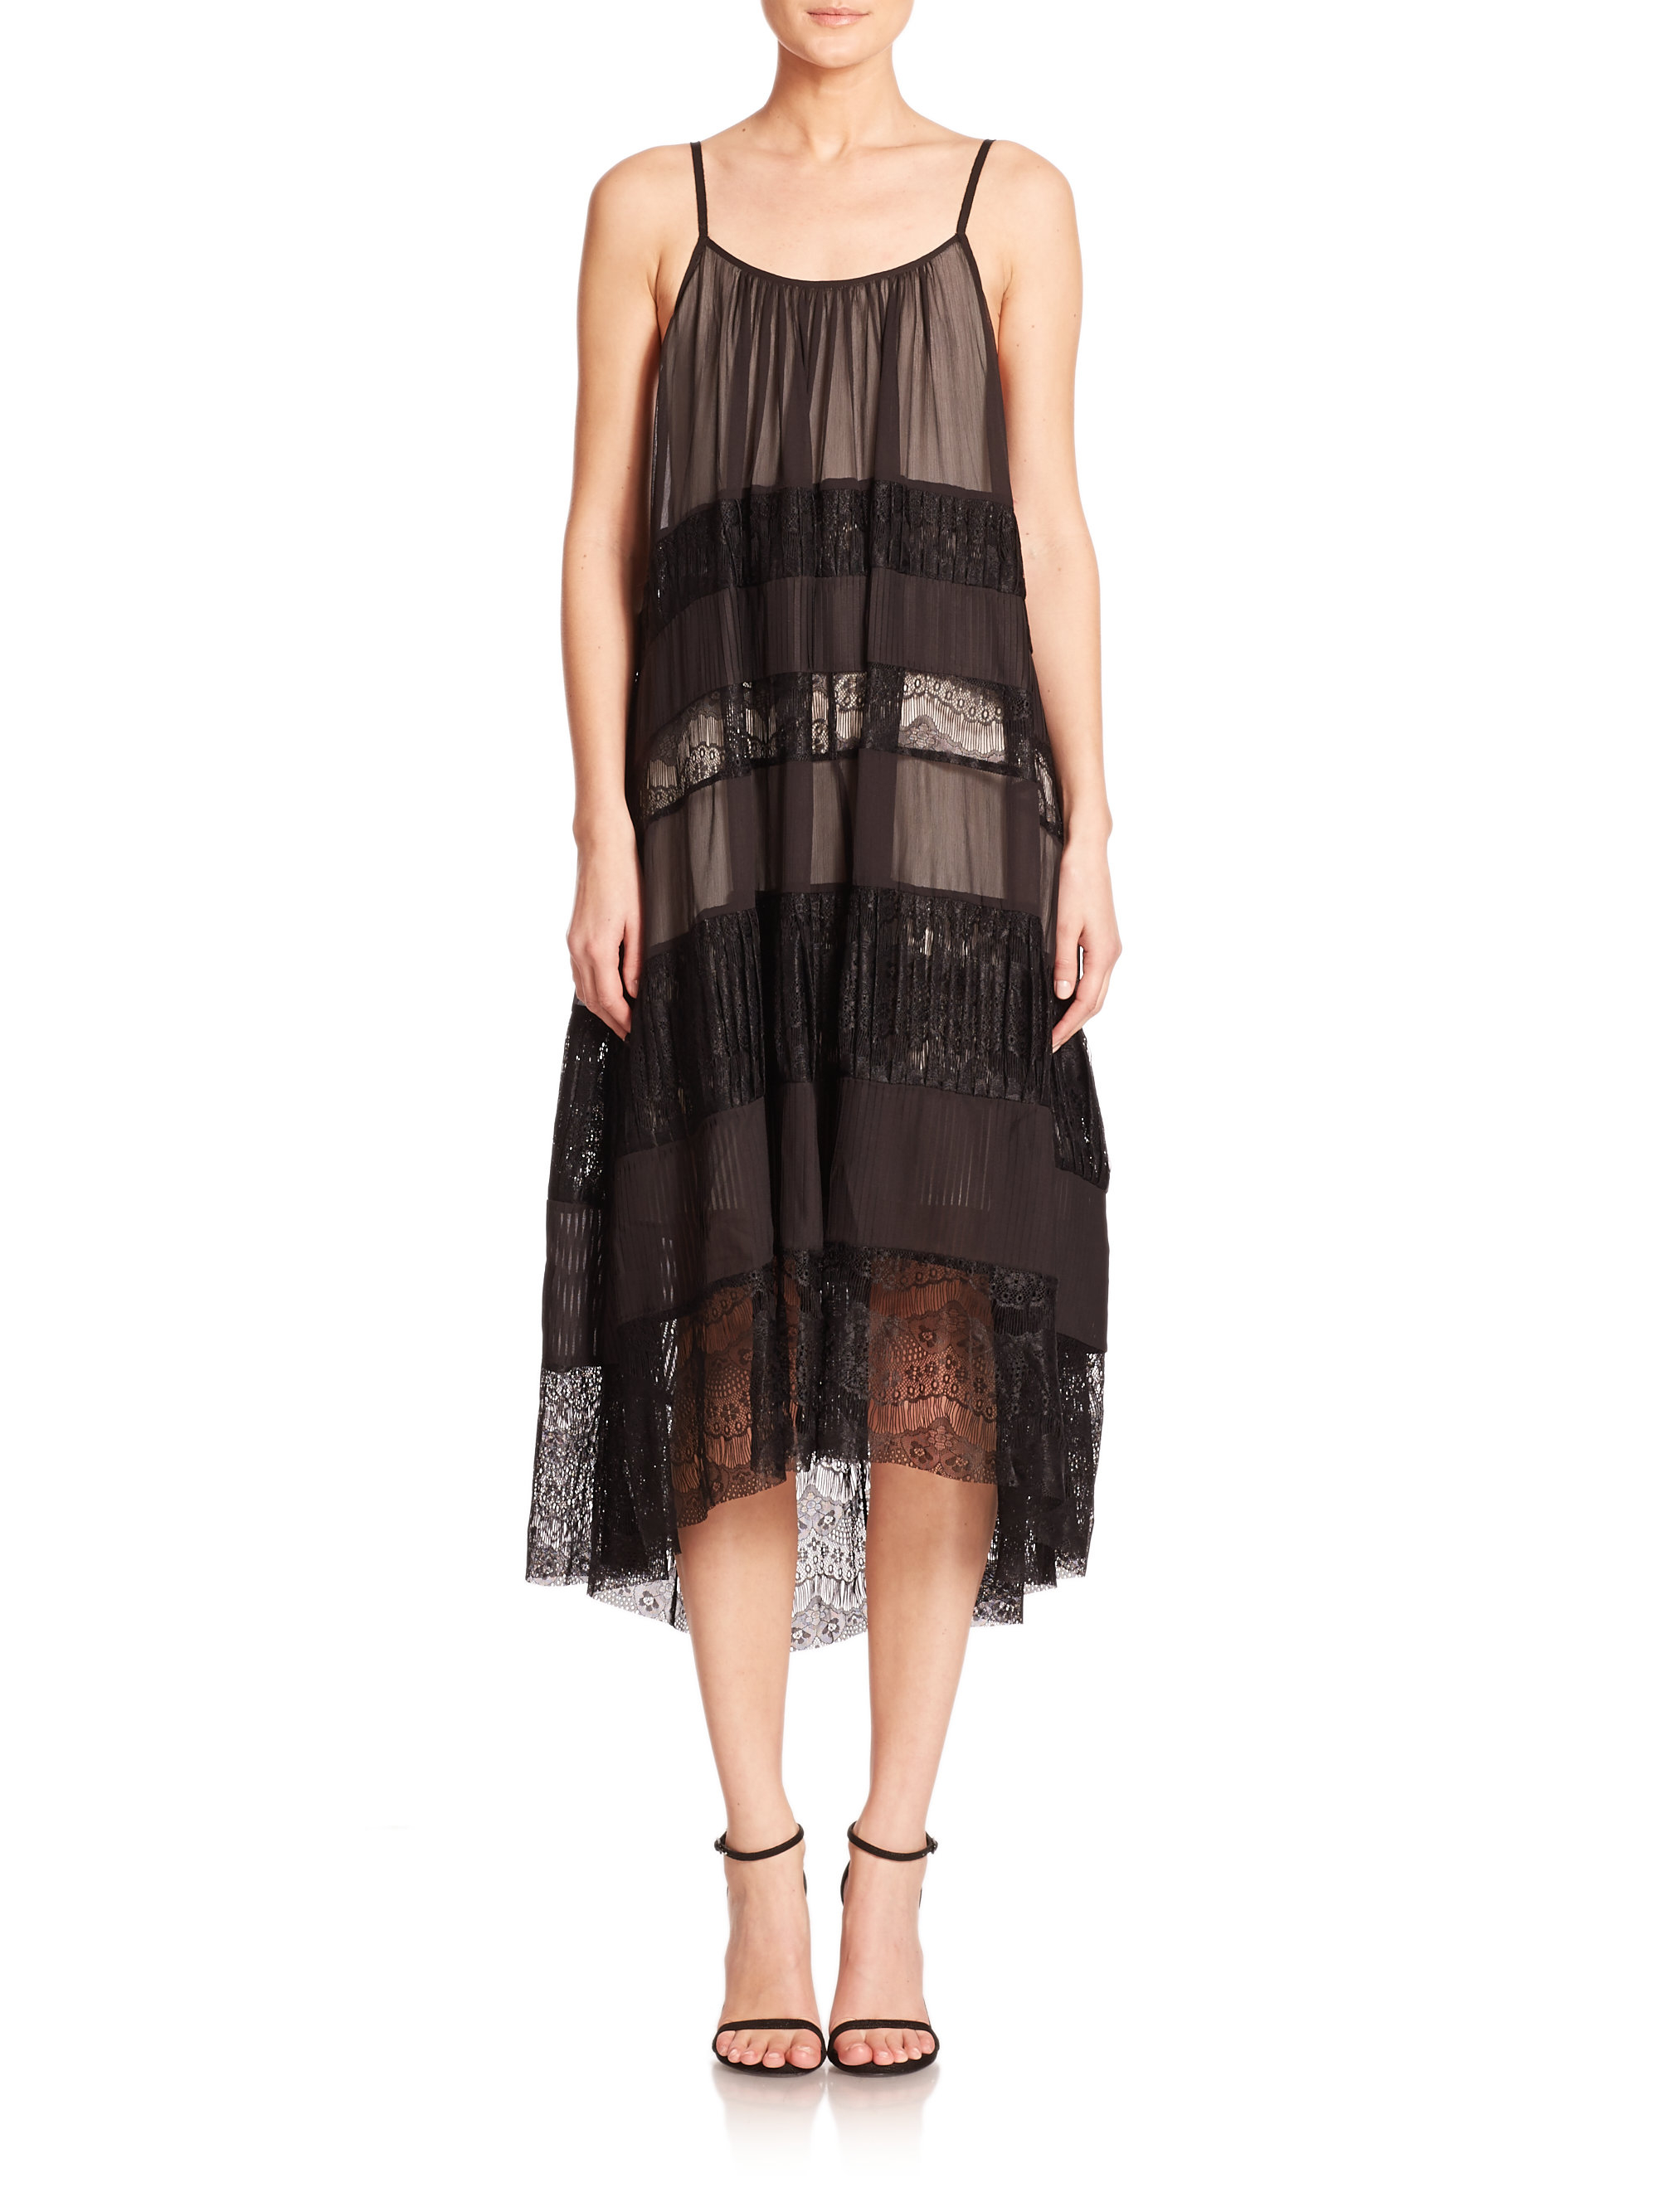 Lyst - Alice + Olivia Dejas Lace-inset Midi Dress in Black